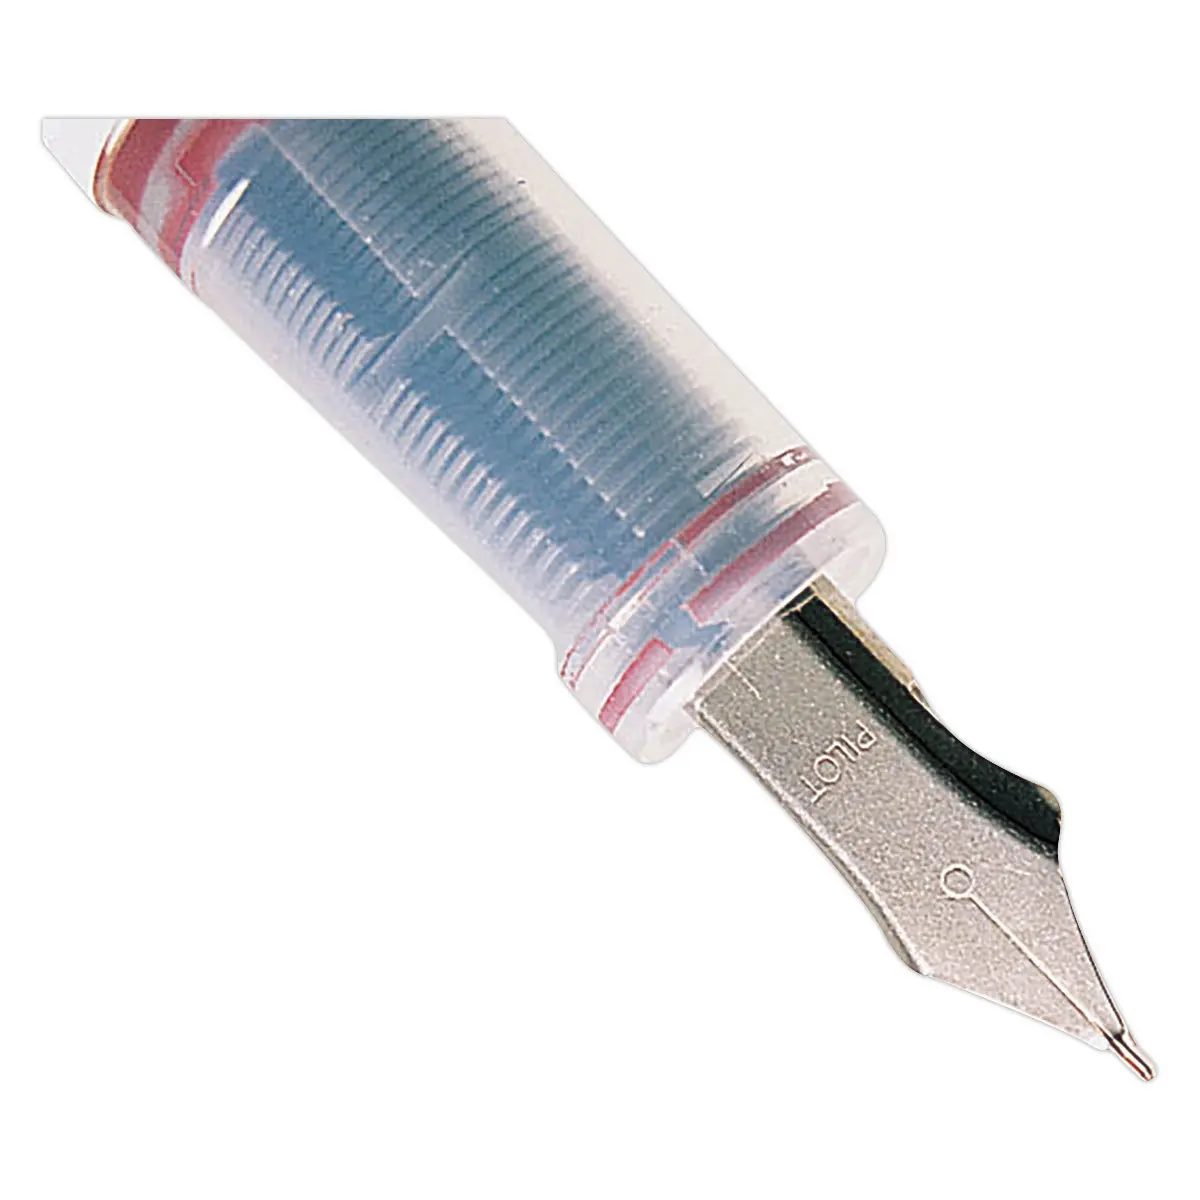 Stylo plume jetable V-Pen PRO - Violet - PILOT photo du produit